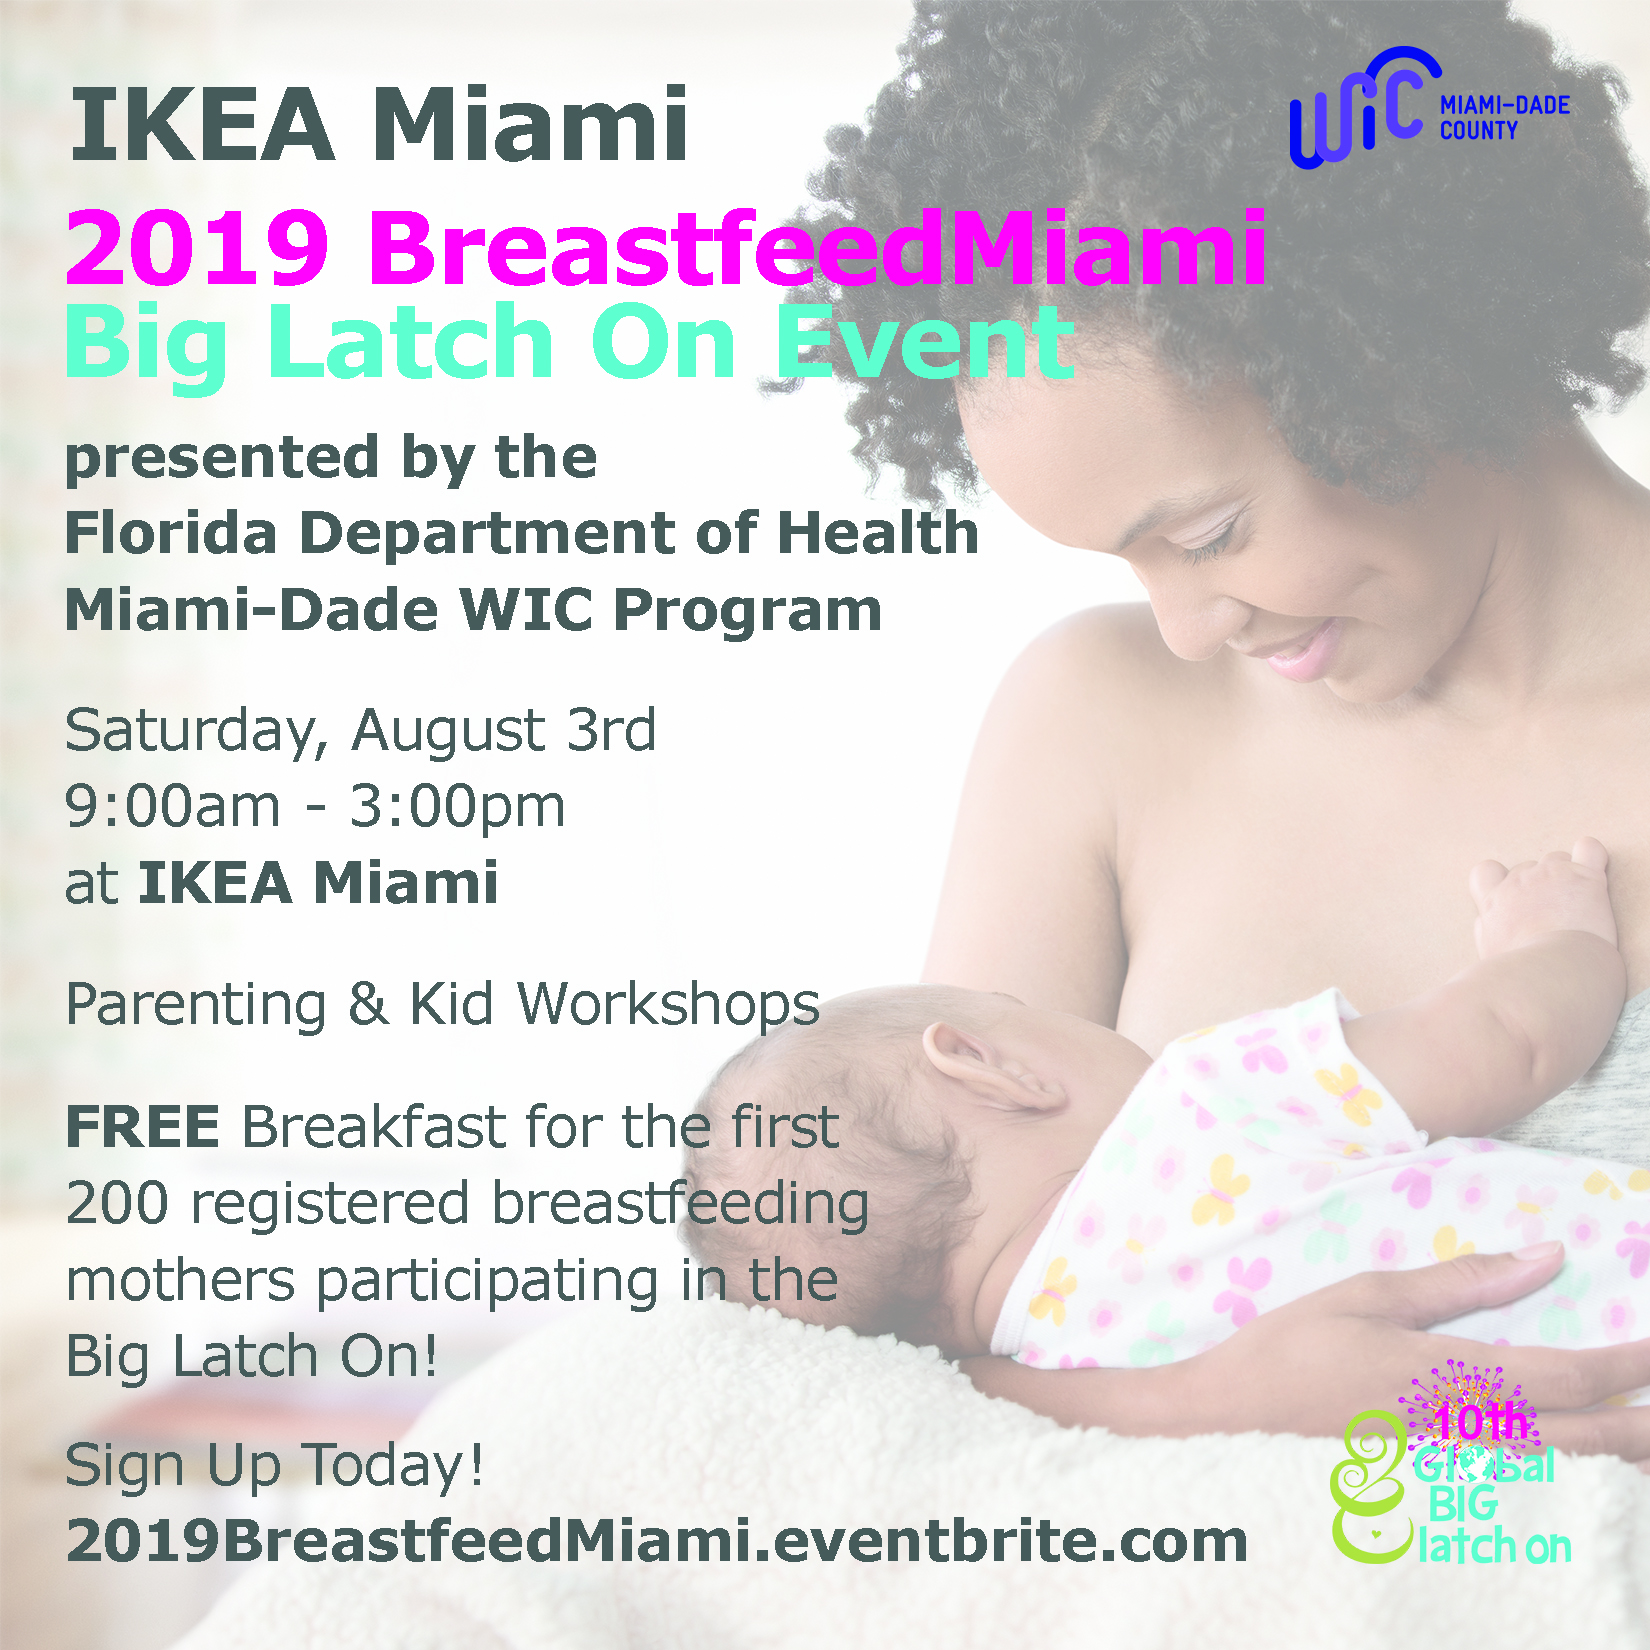 BreastfeedMiami Event Flyer